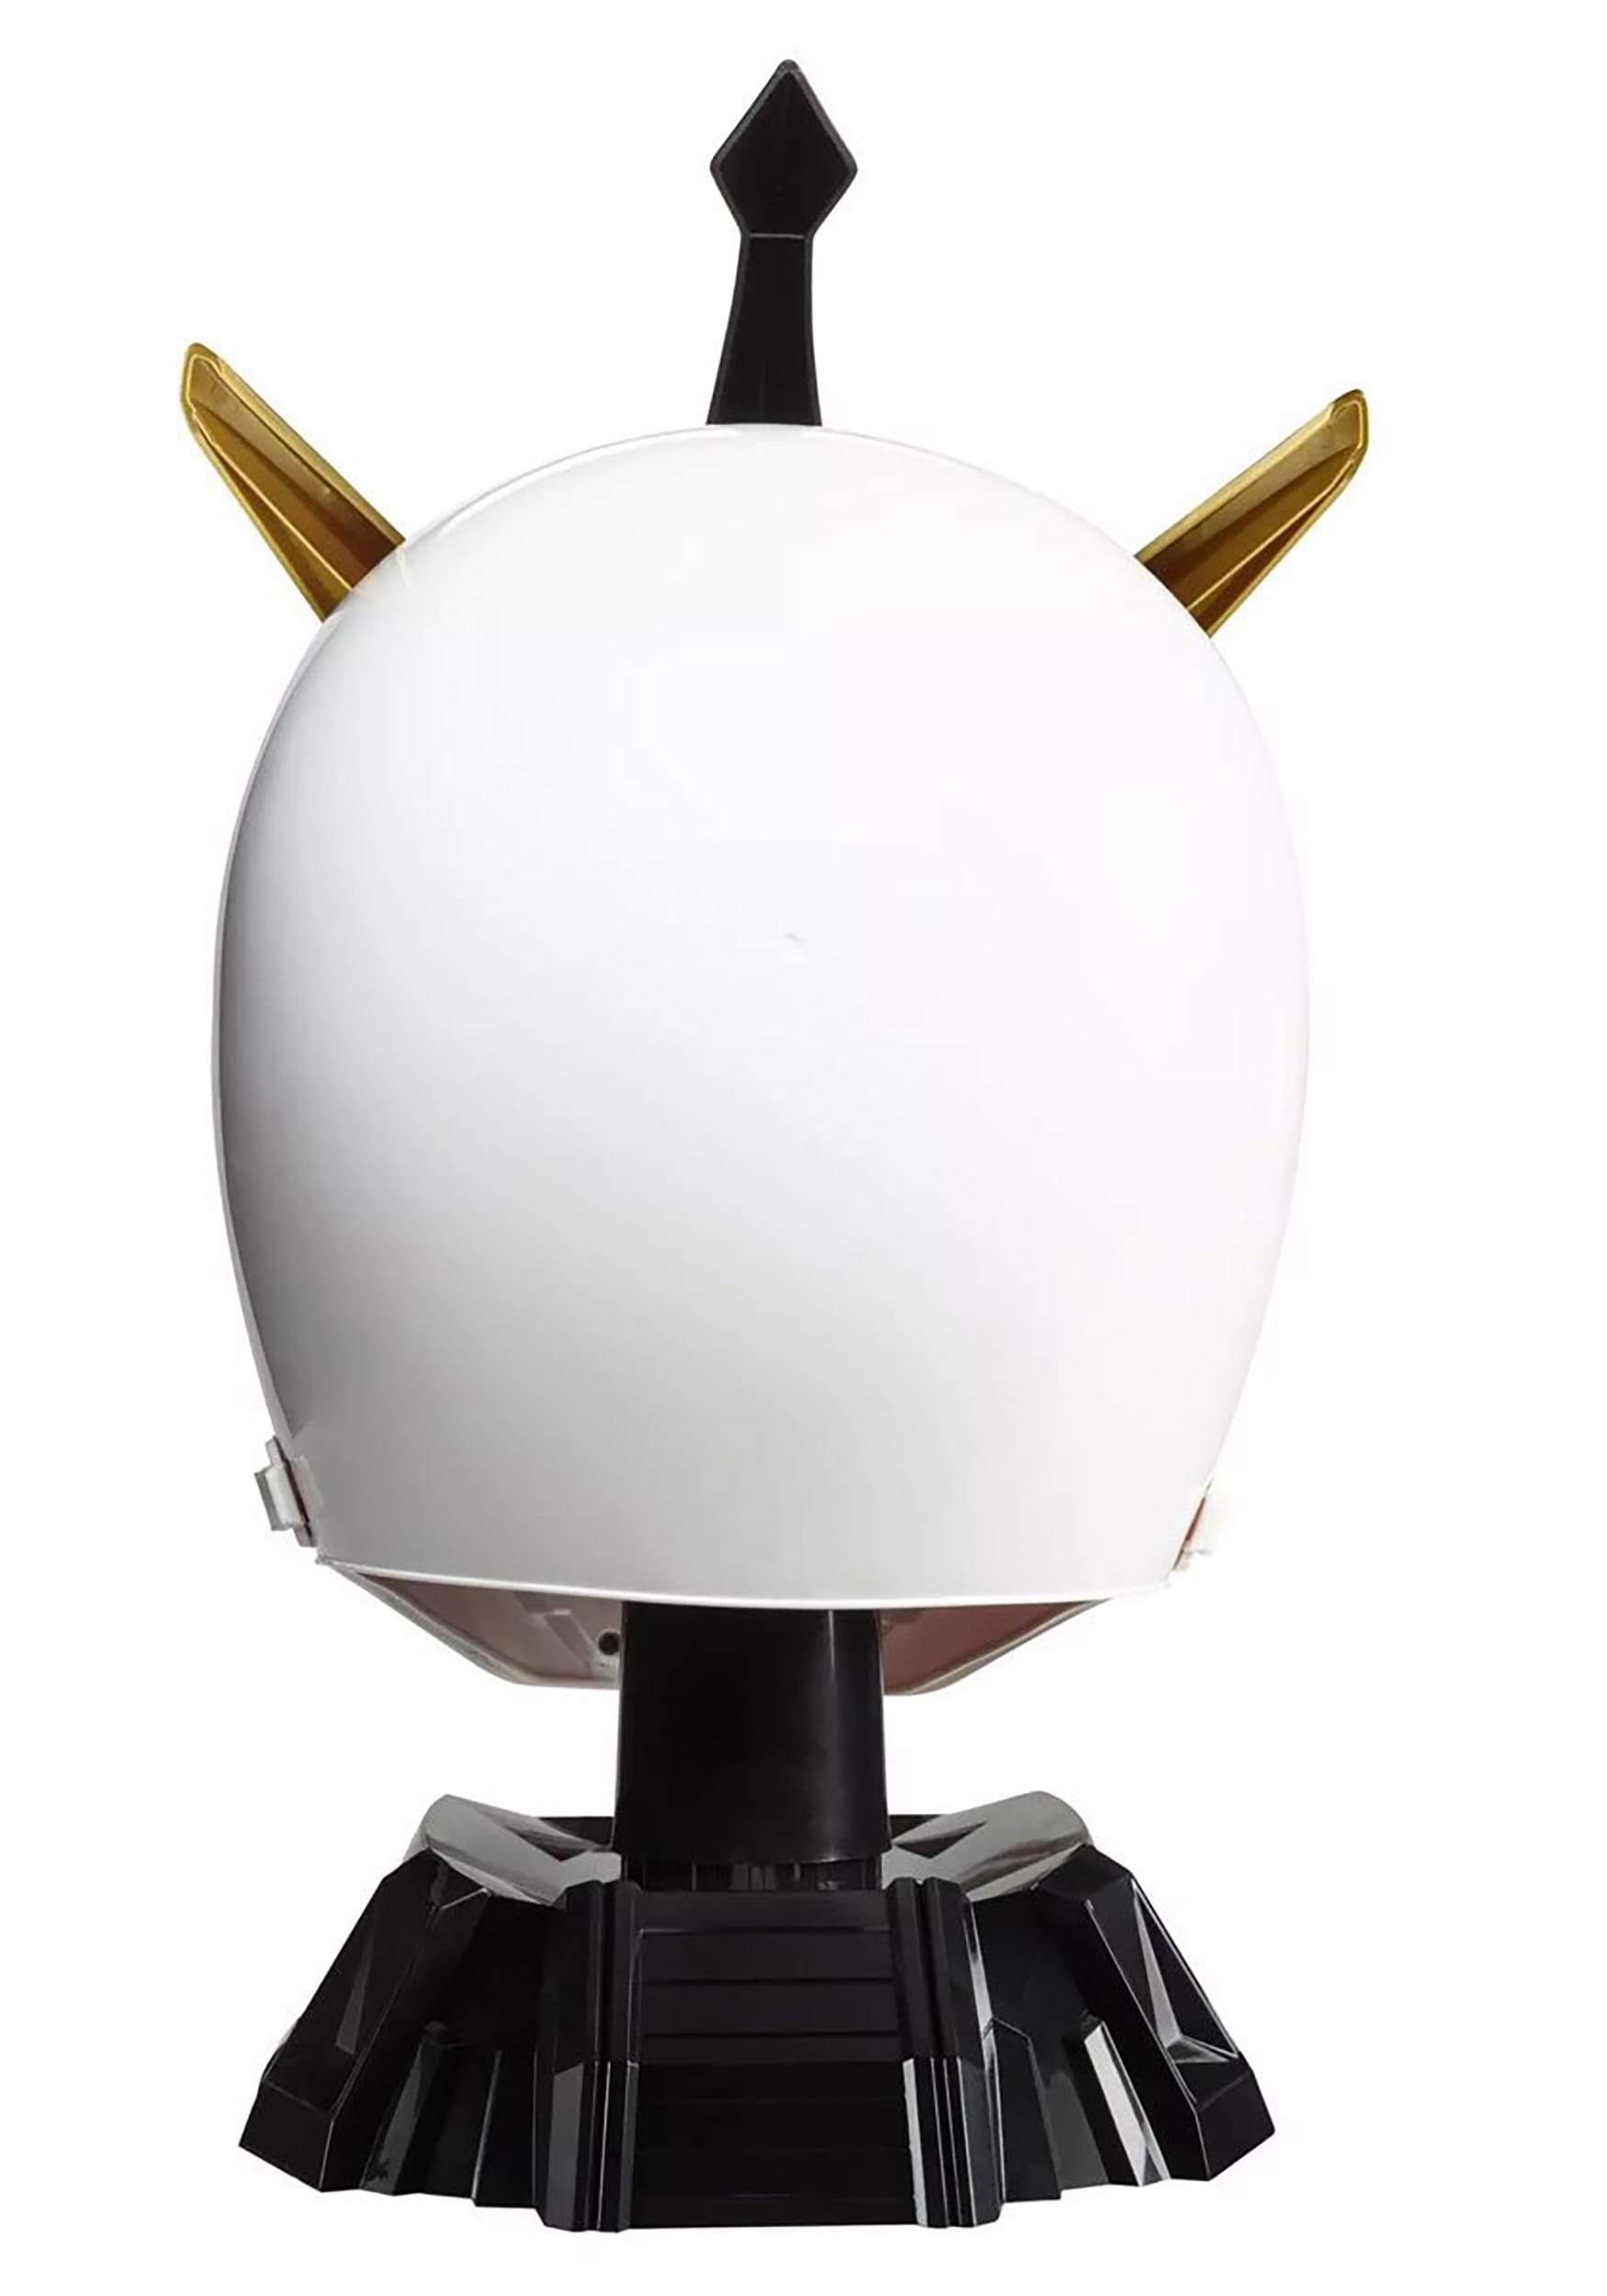 Lightning Collection Lord Drakkon Power Rangers Helmet